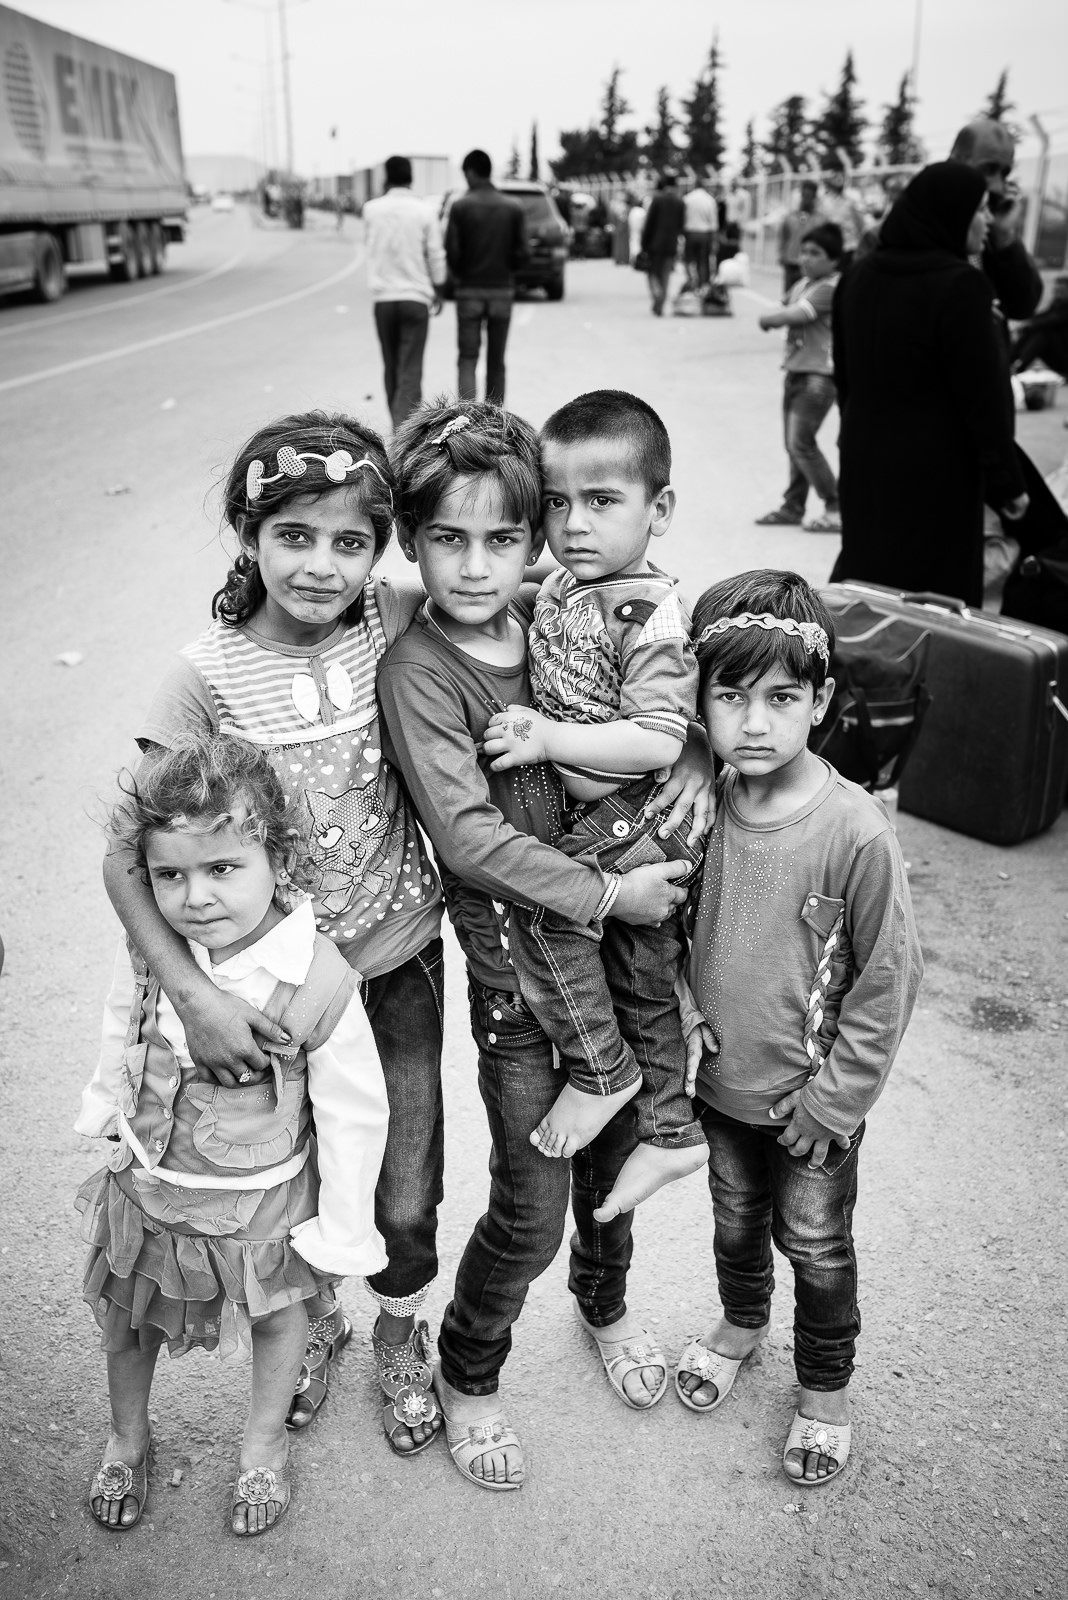  syrian refugees giulio magnifico